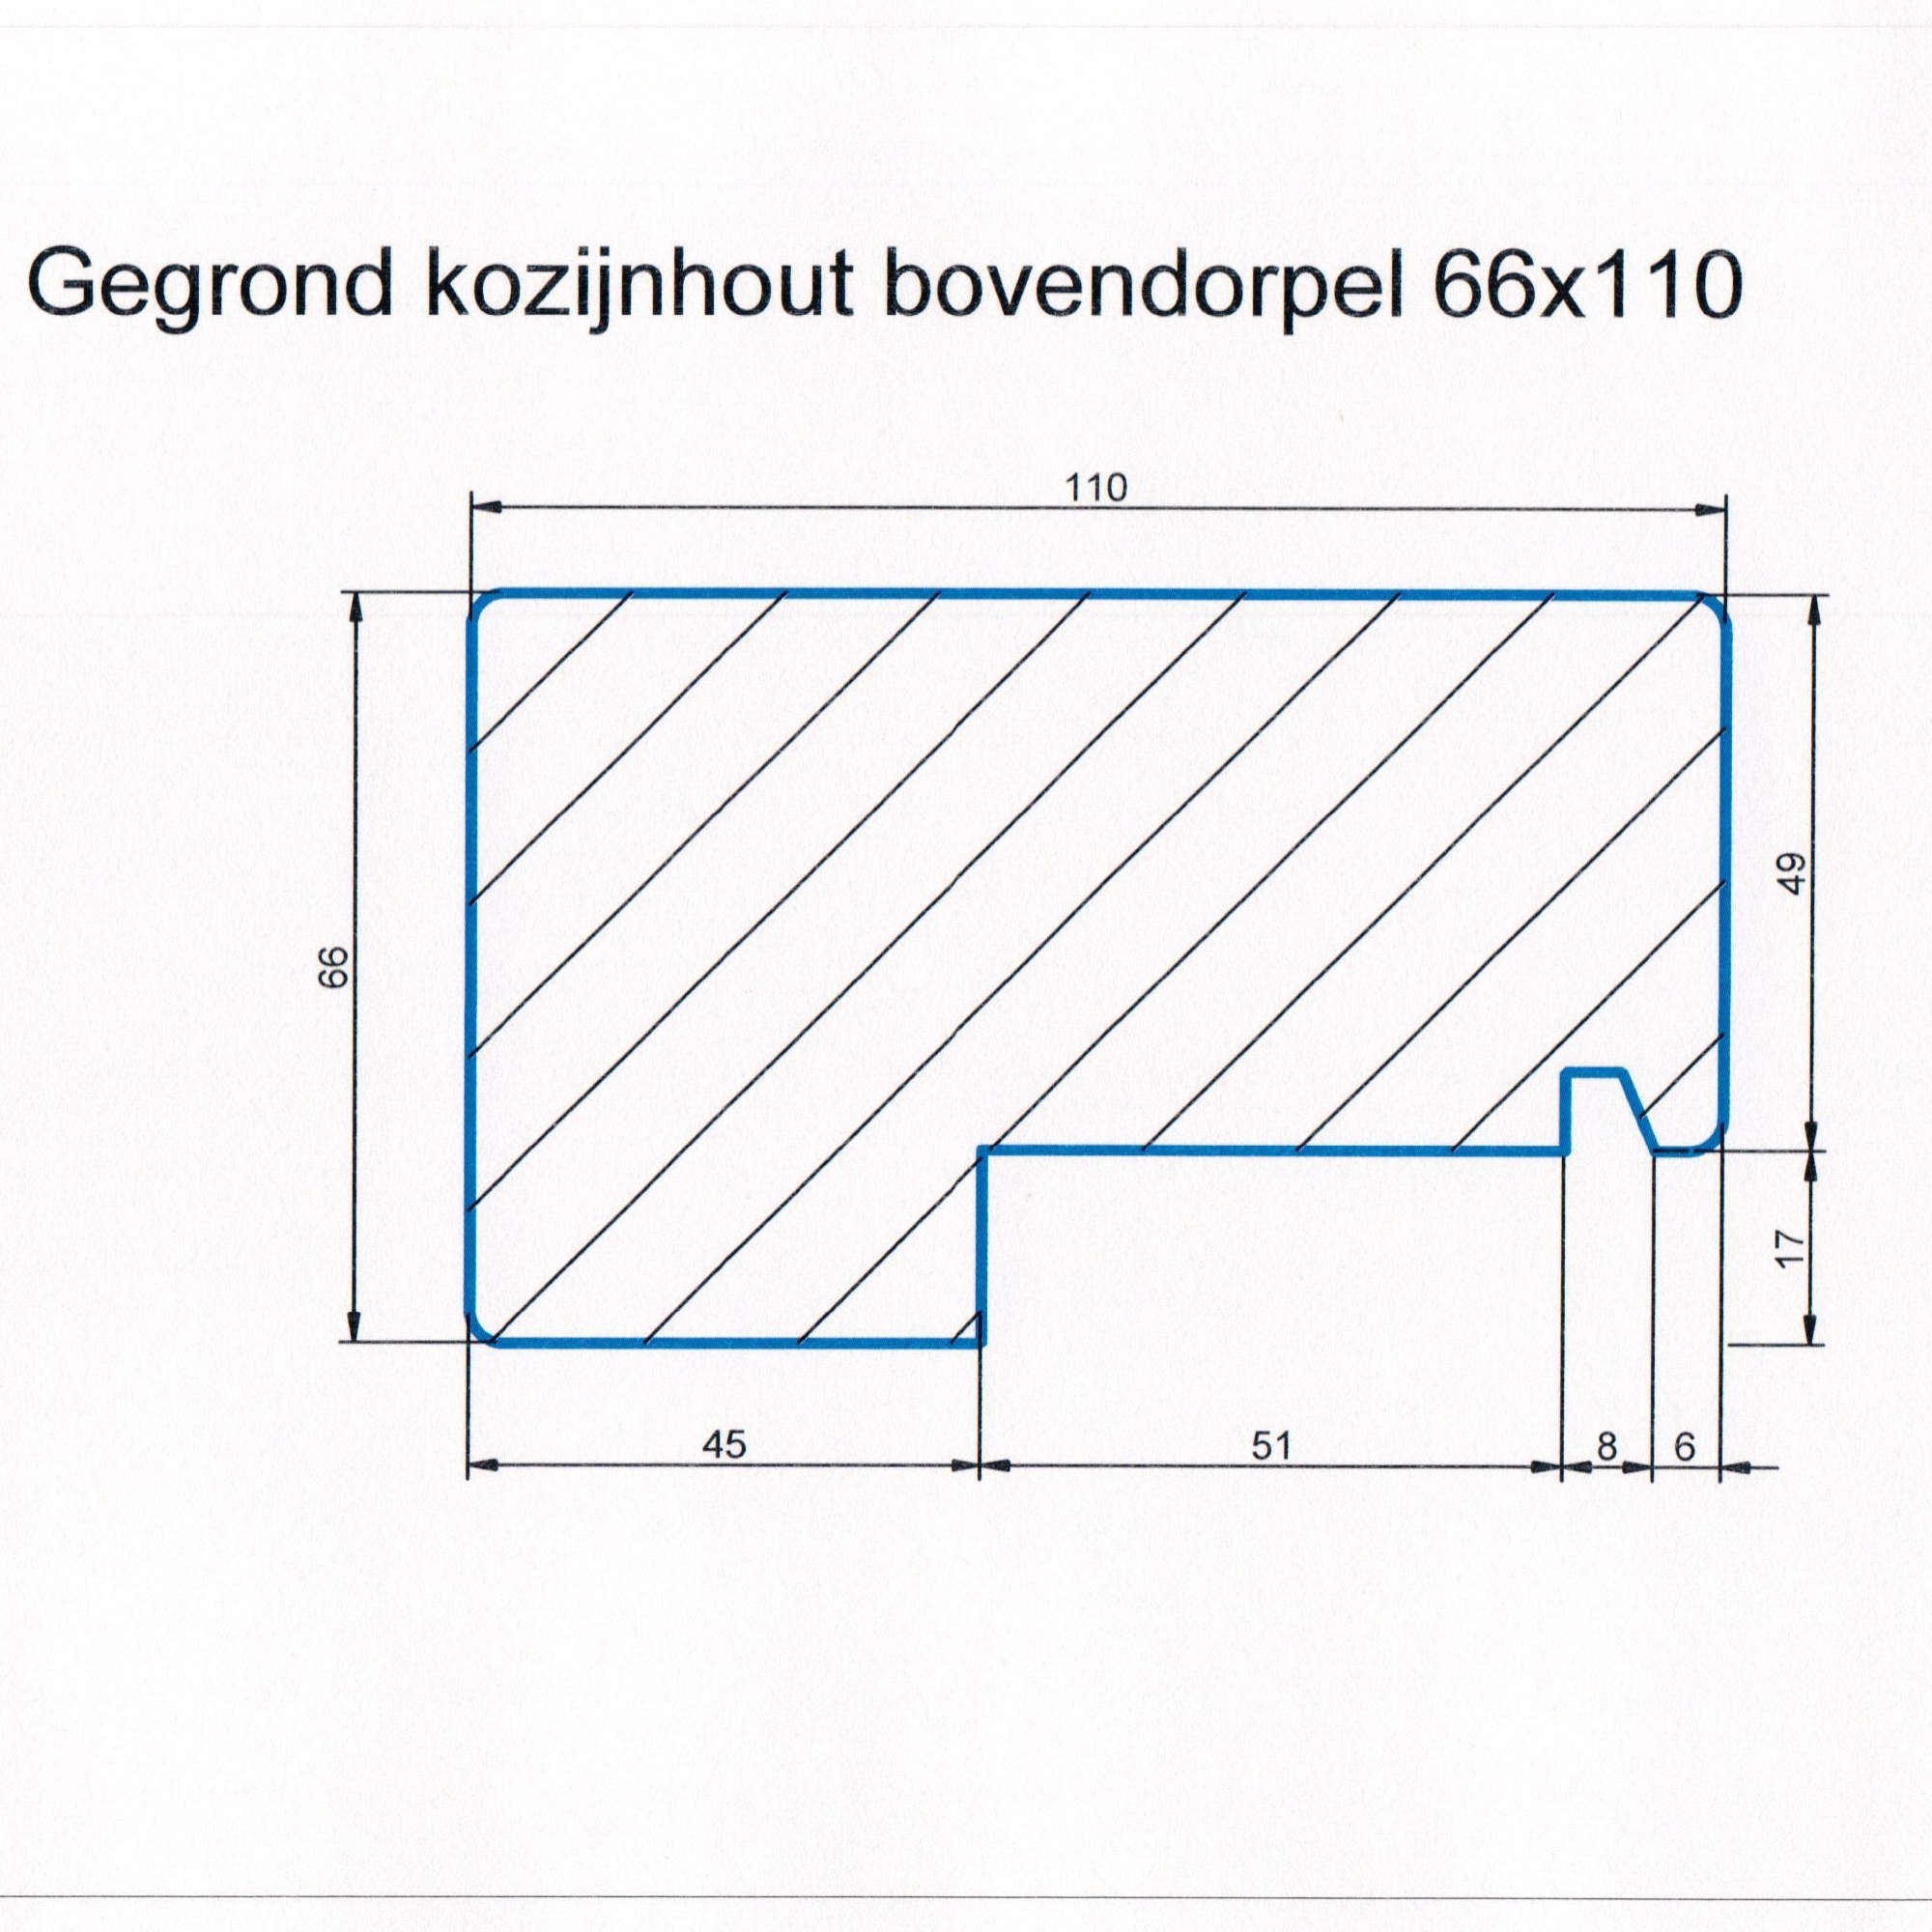 Hardhout 66x110 kozijnhout gegrond L=4720 bovendorpel